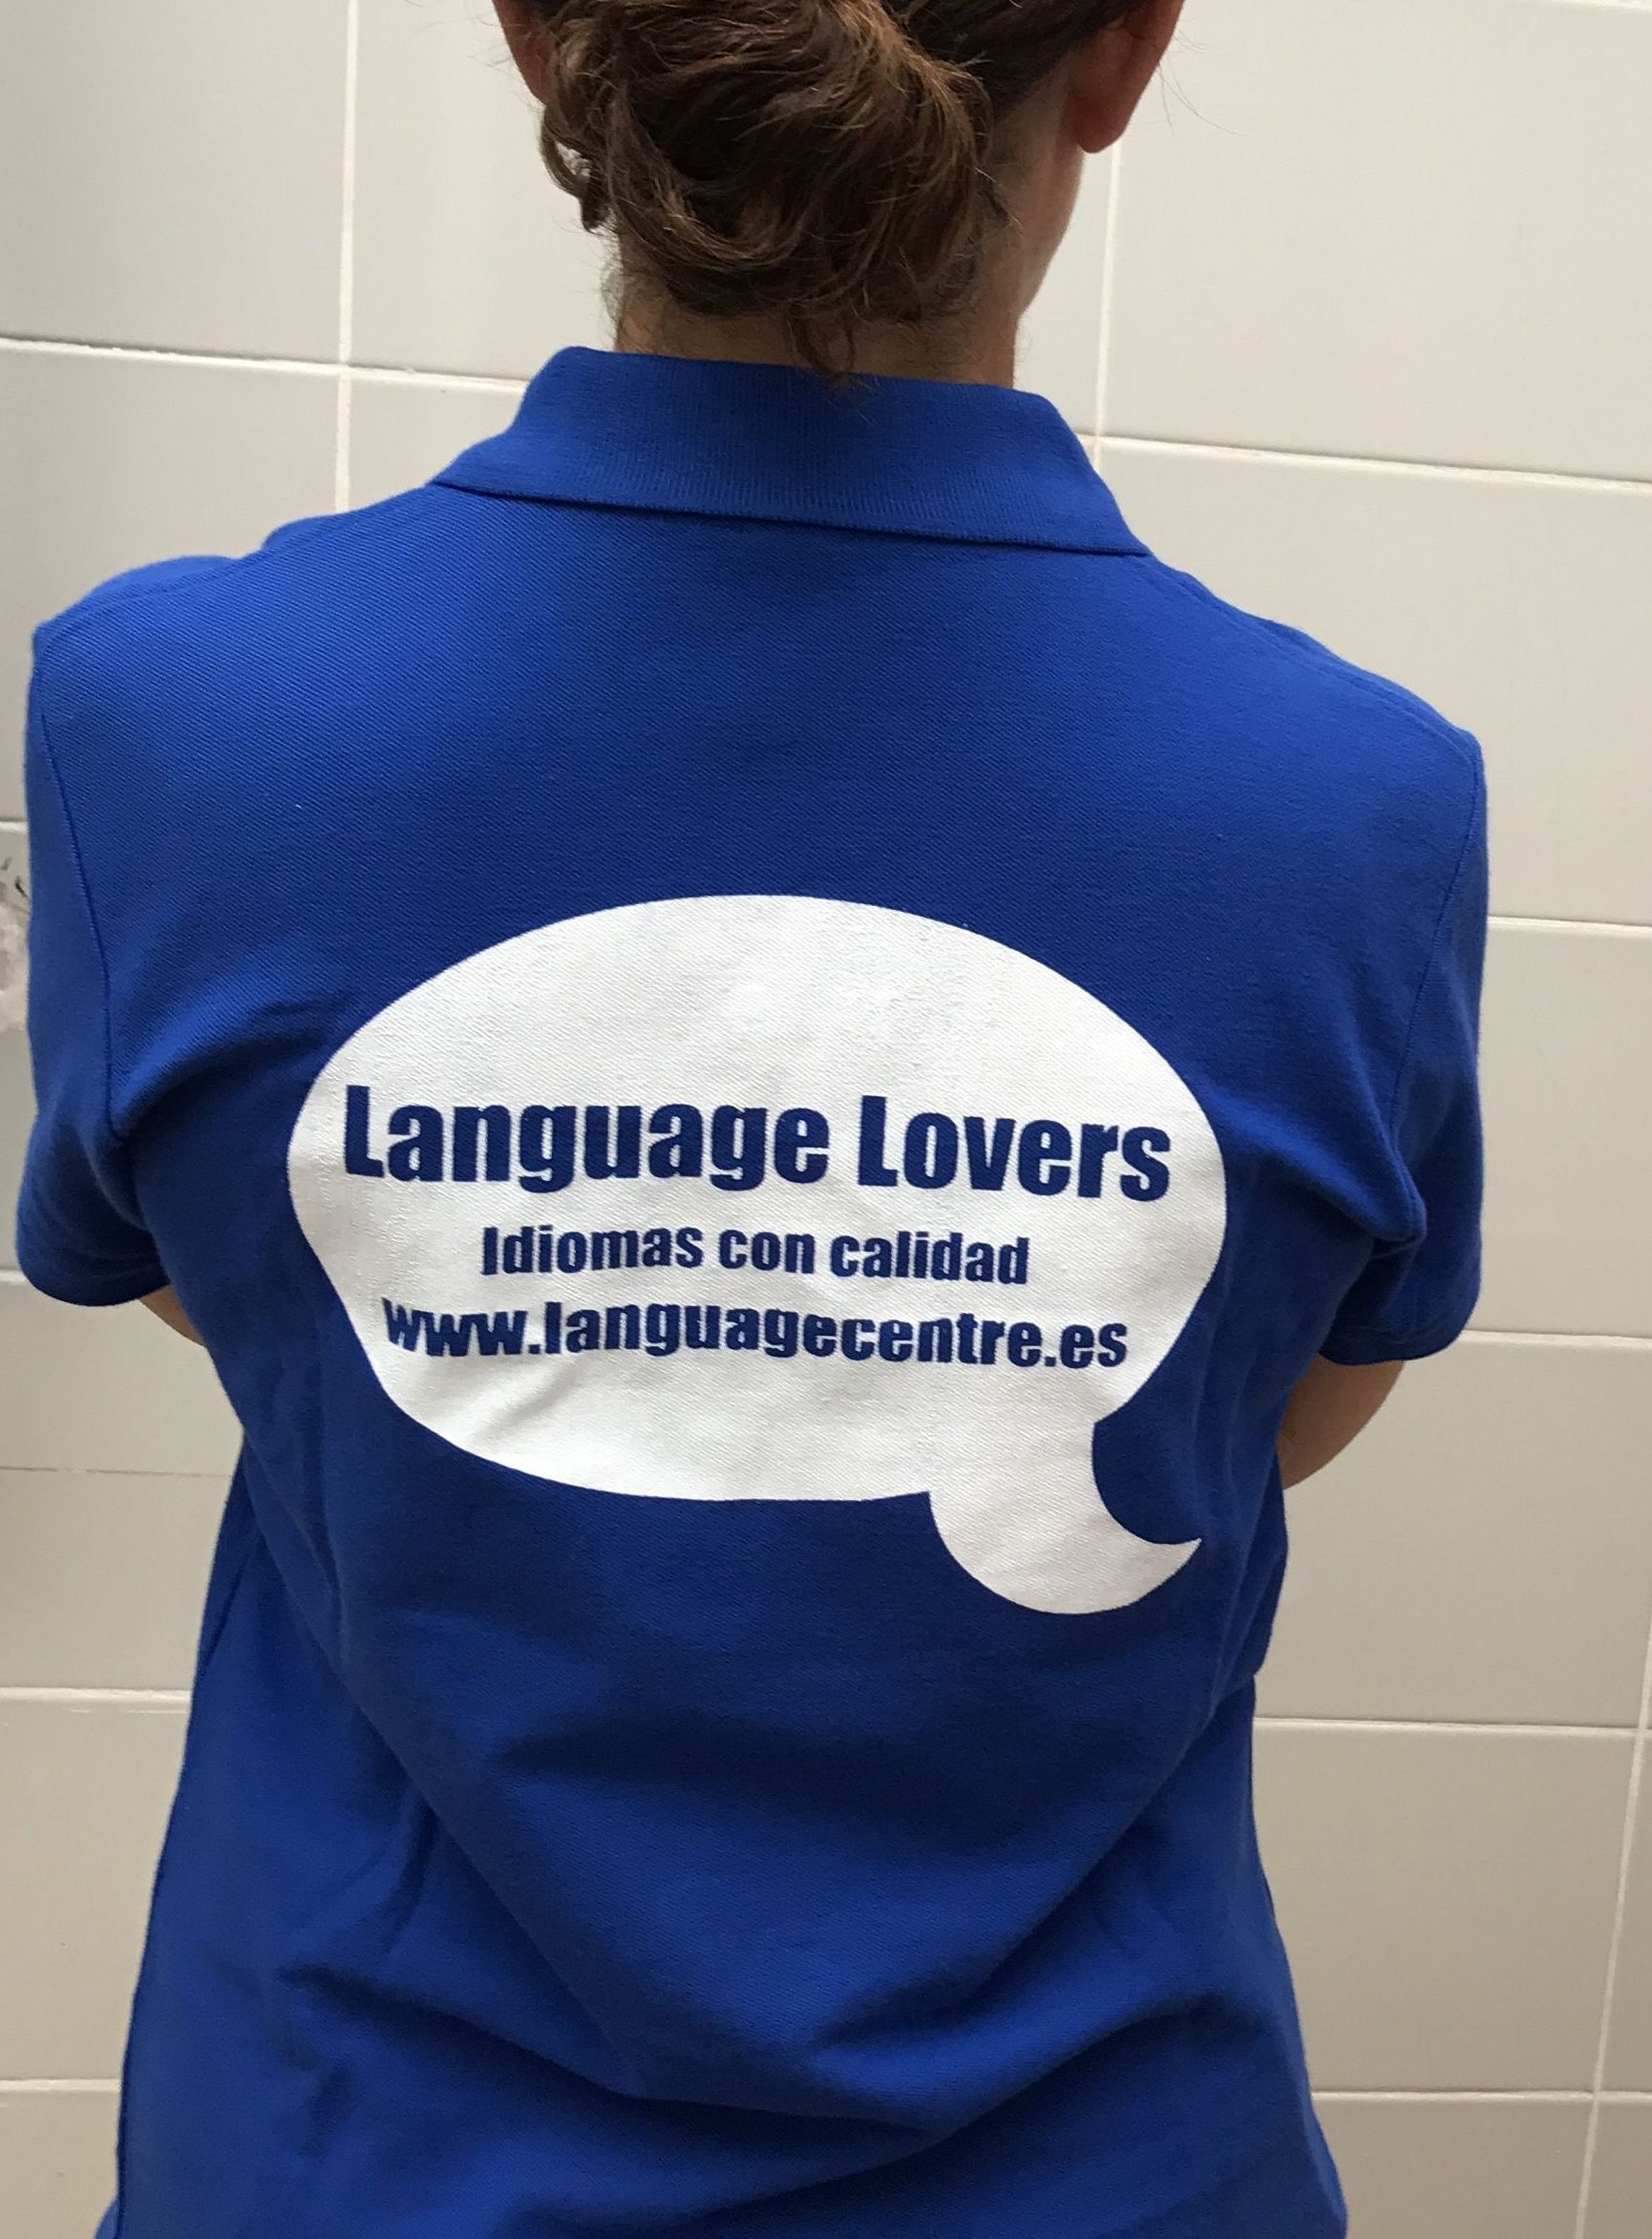 Language lovers }}